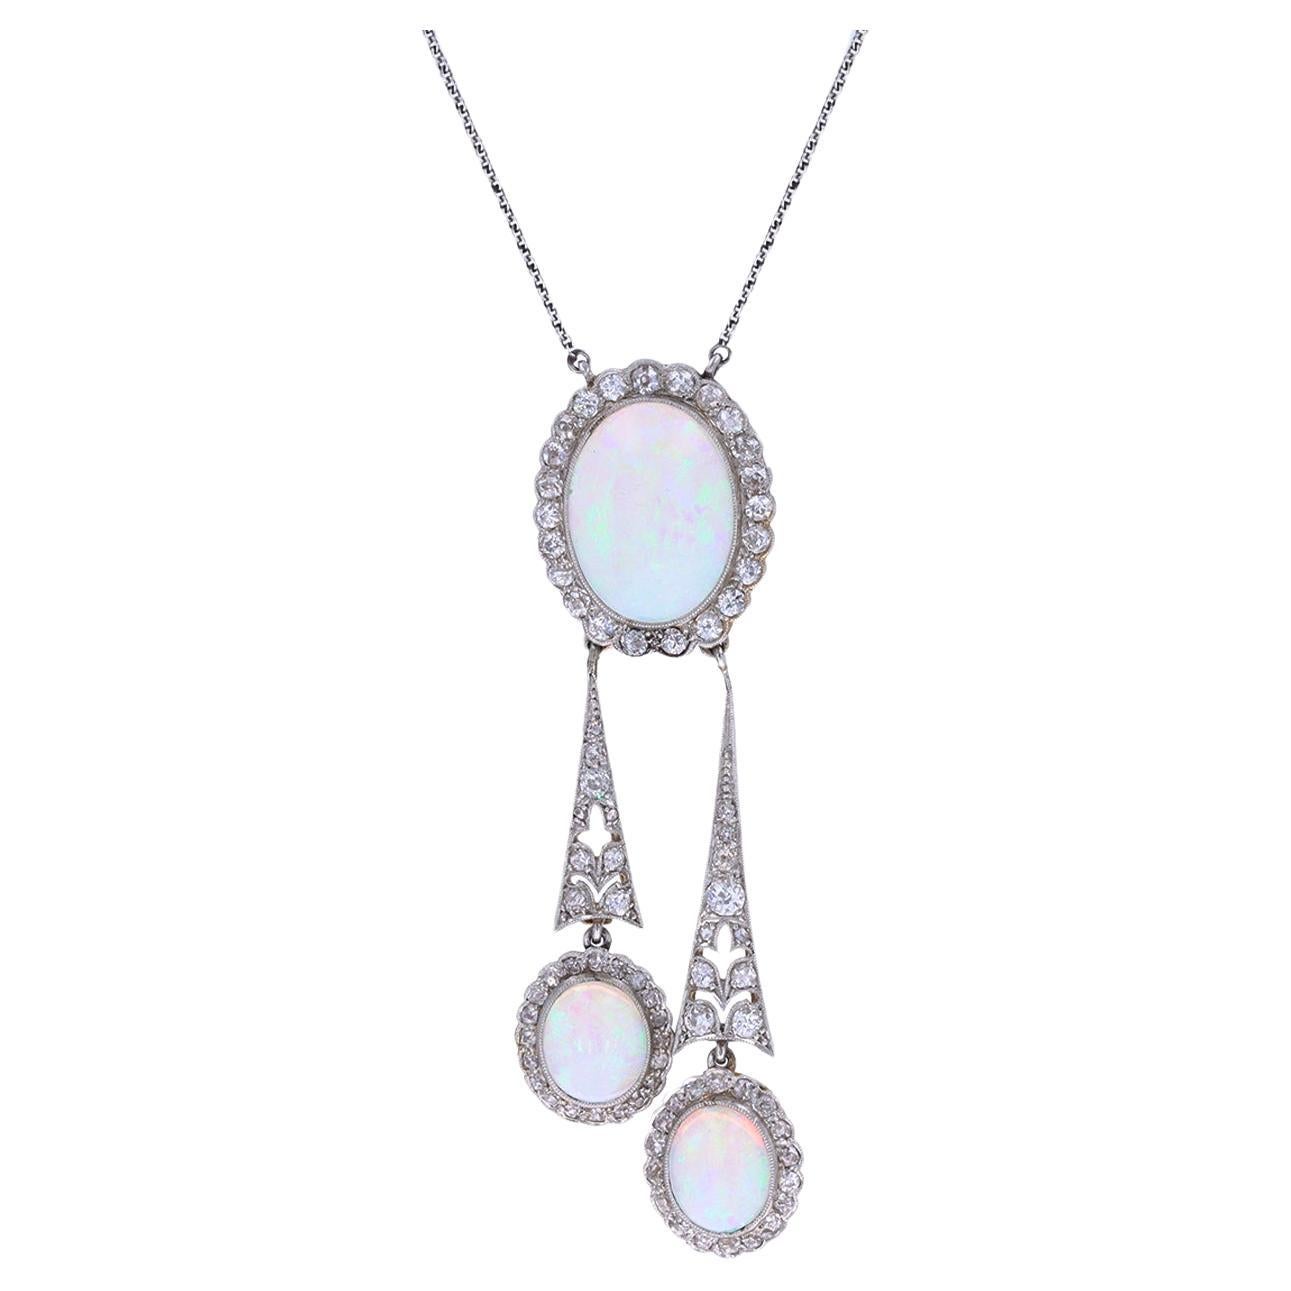 Opal and diamond negligée necklace, circa 1905.